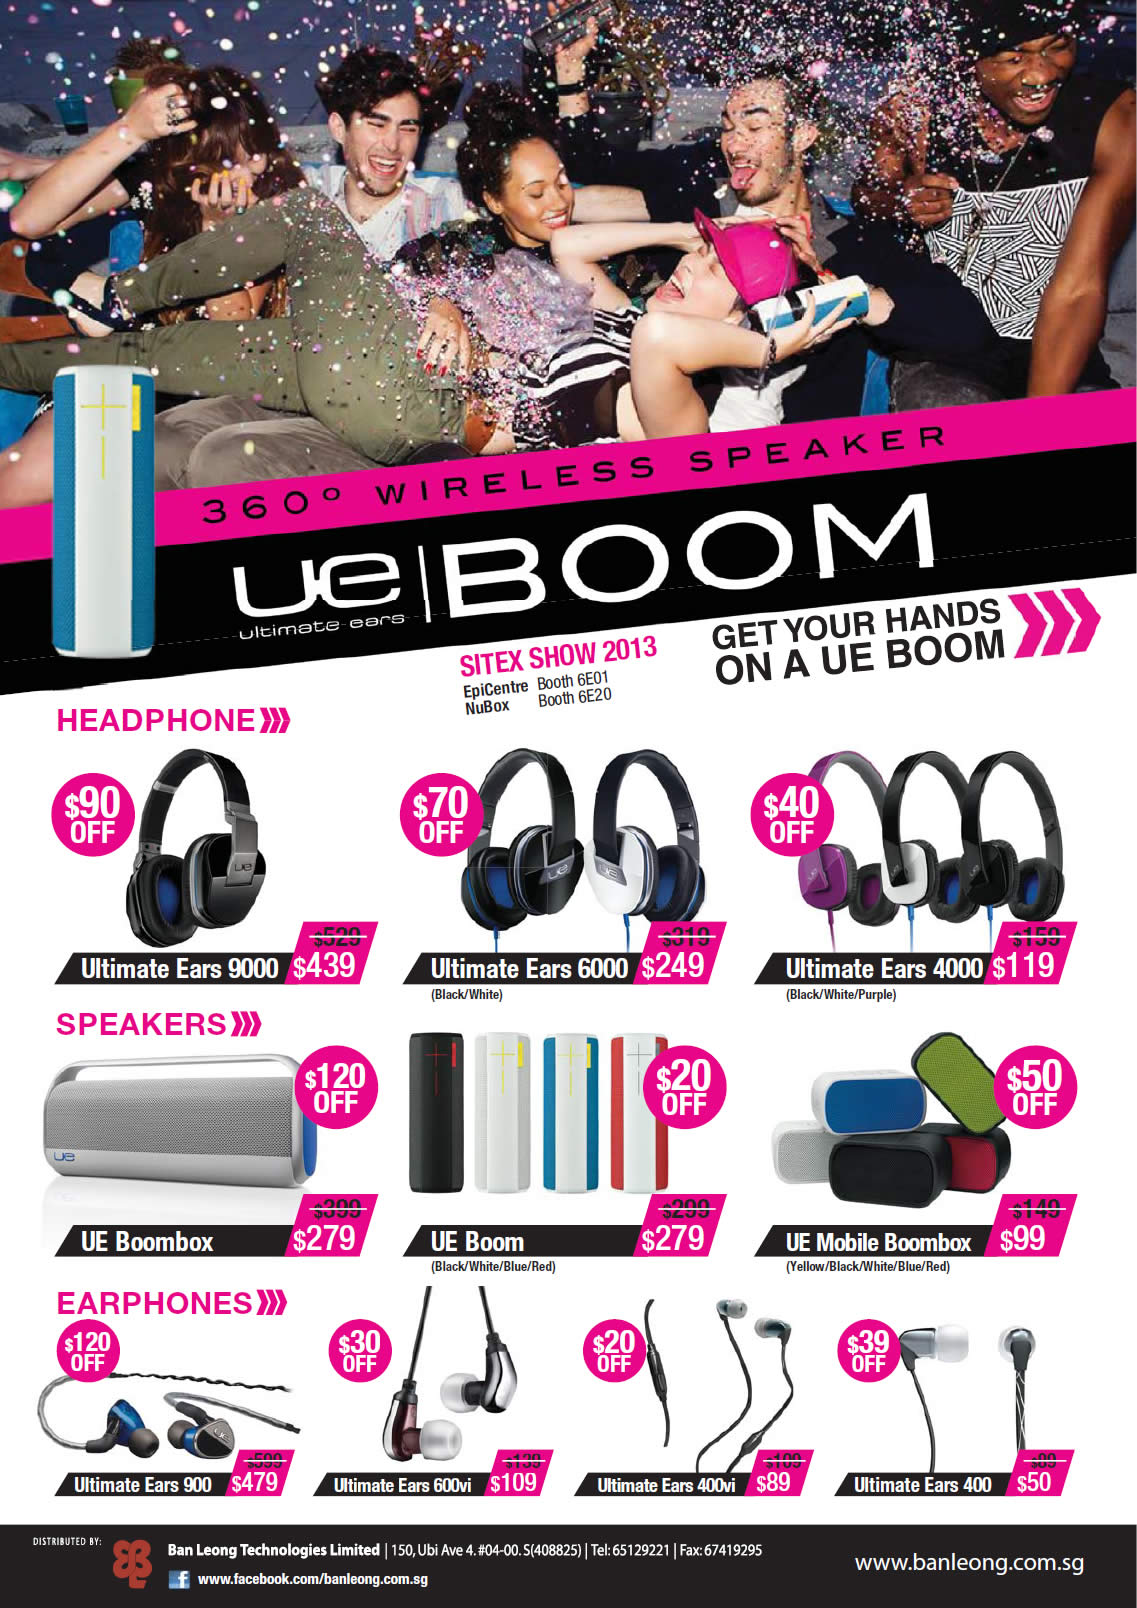 SITEX 2013 price list image brochure of Logitech Headphones, Speakers, Earphones, Ultimate Ears 9000, 6000, 4000, 900, 400vi, 400, 600vi, UE Boombox, Boom, Mobile Boombox